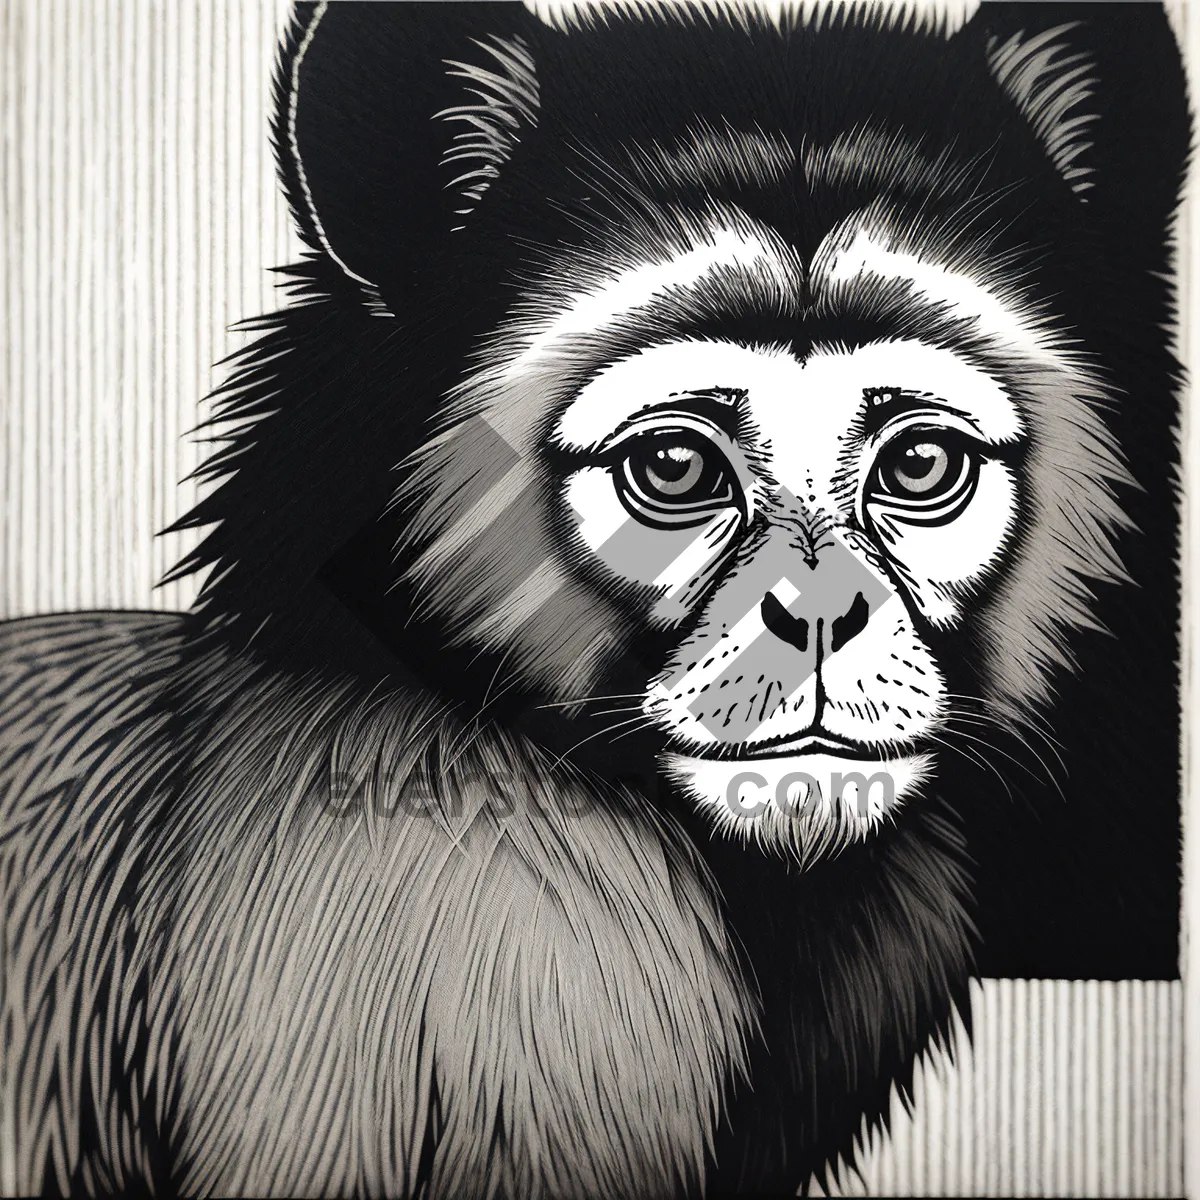 Picture of Primate Monkey Gibbon Ape Face Black